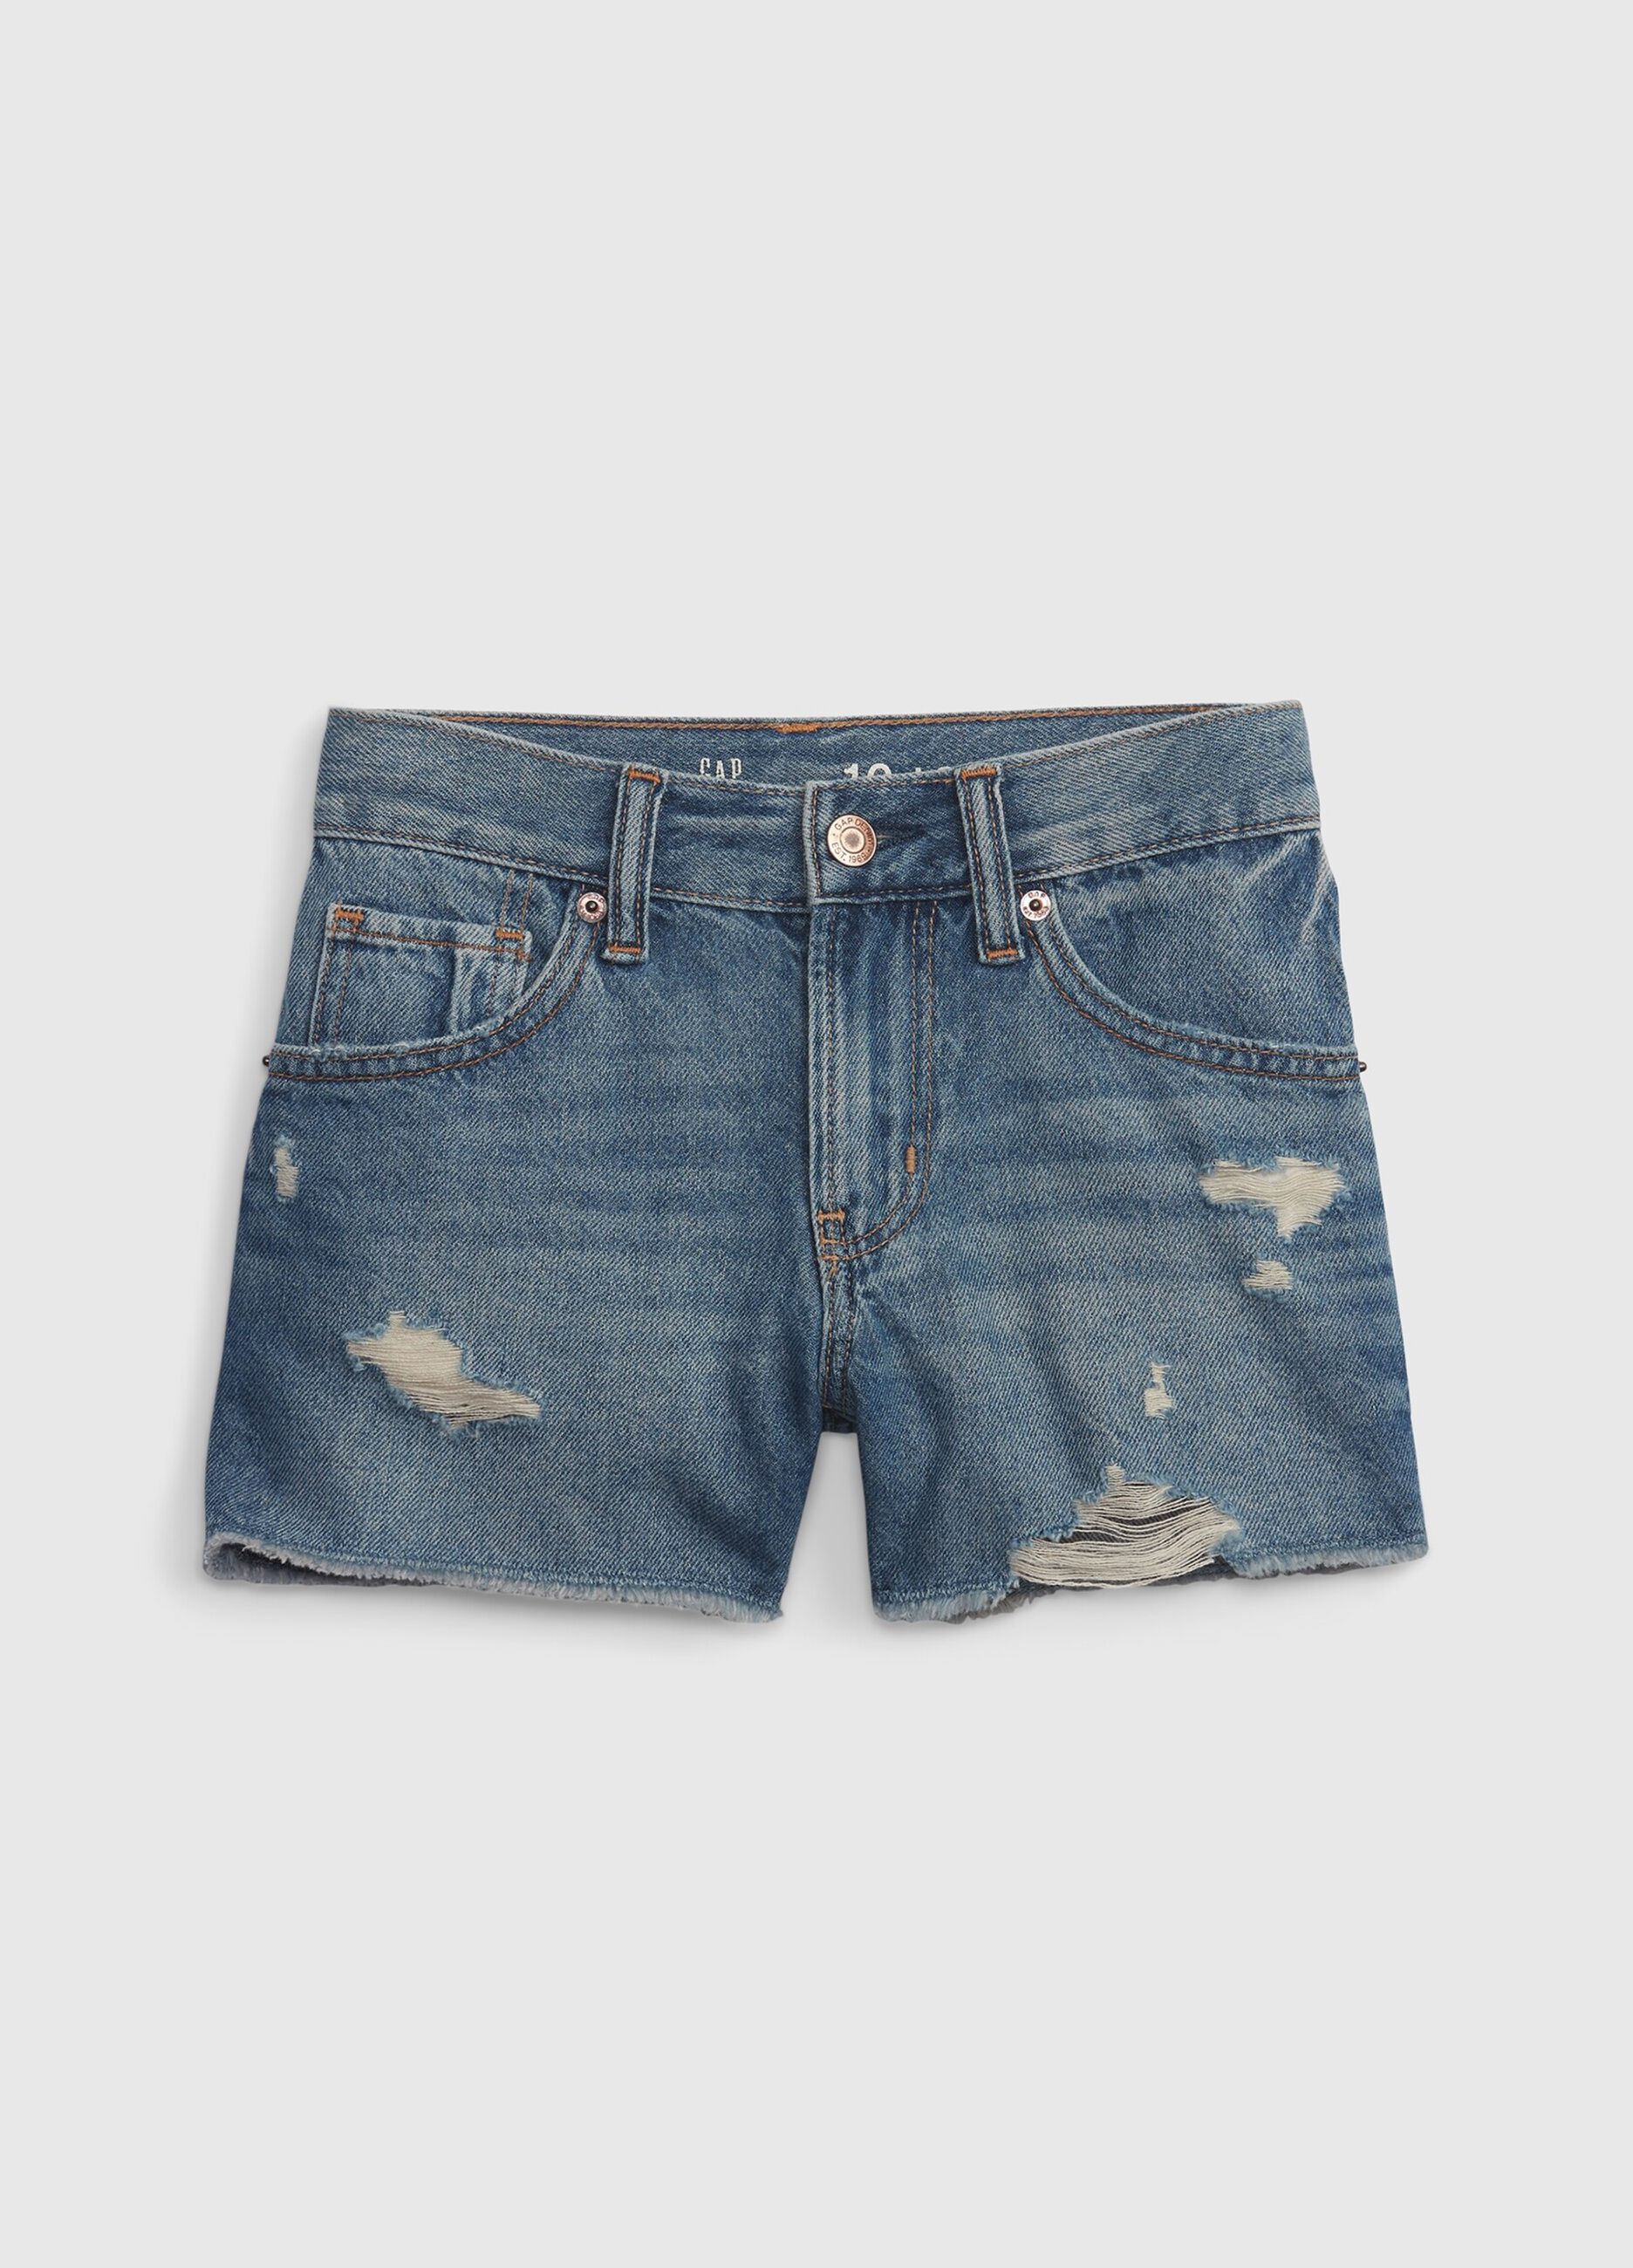 Acid wash denim shorts with worn effect